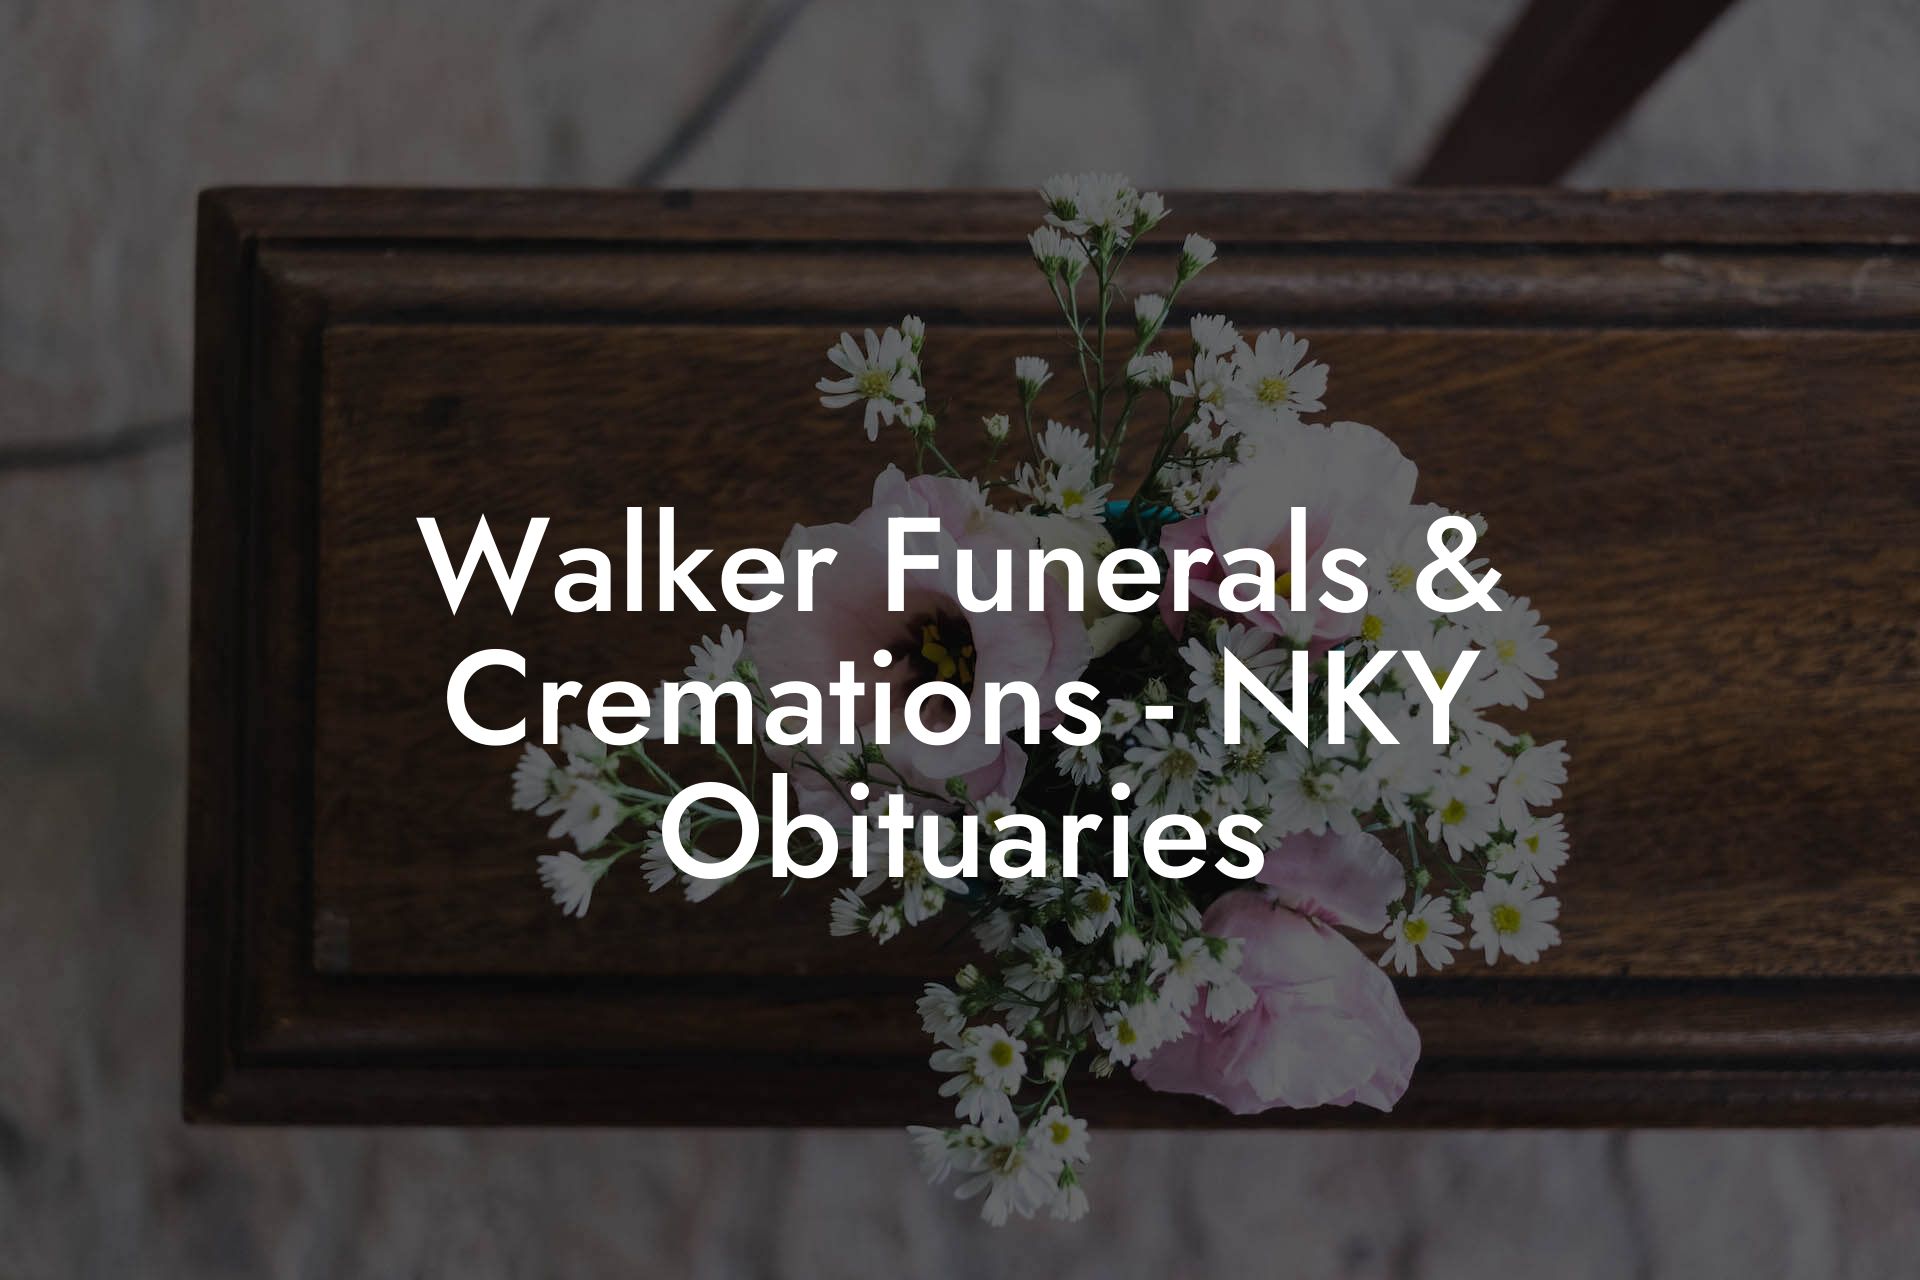 Walker Funerals & Cremations - NKY Obituaries